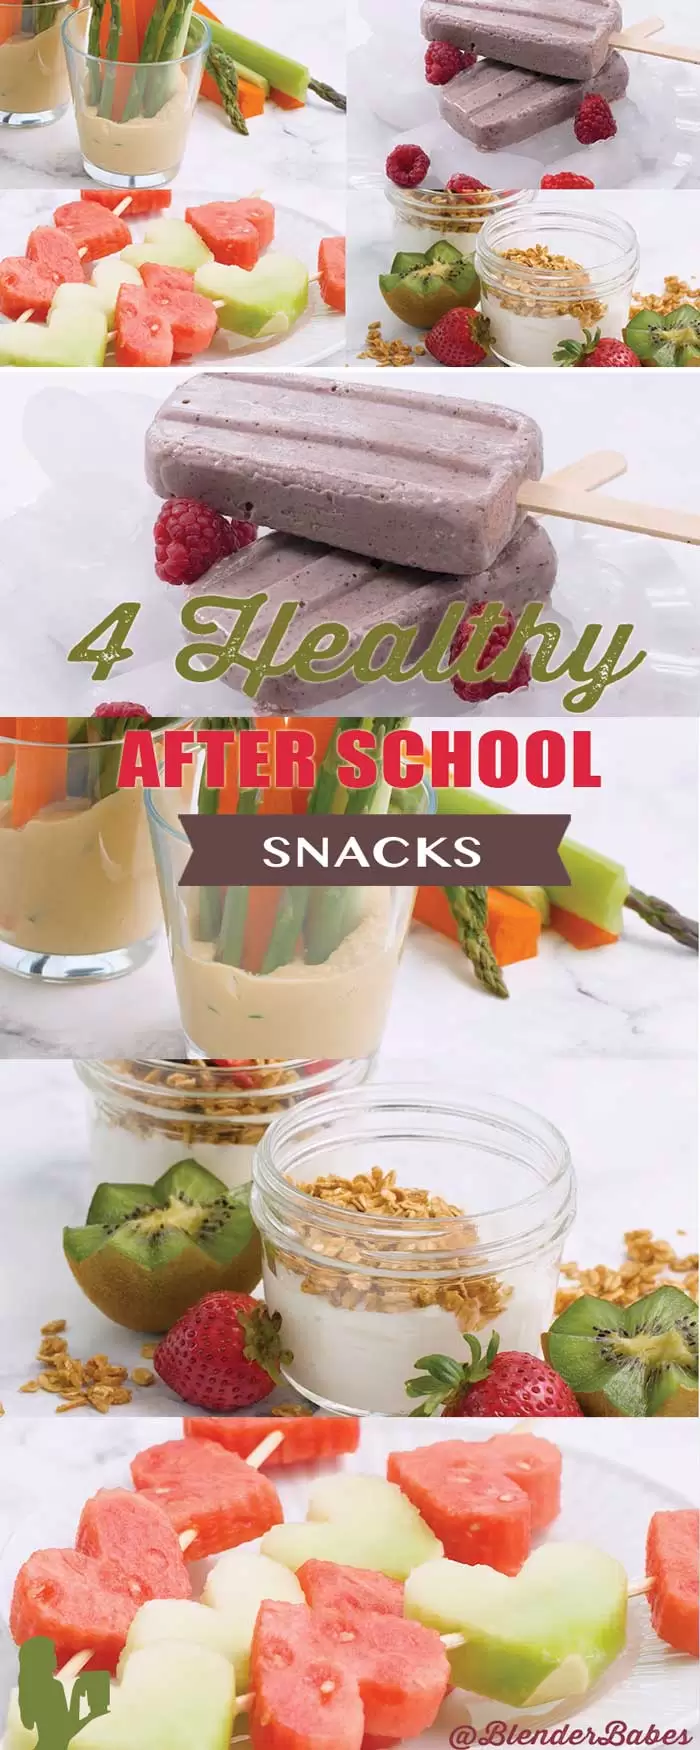 4 Easy Healthy After School Snacks for Kids by @BlenderBabes #snacks #snackideas #snacksforkids #healthysnacks #blenderbabes